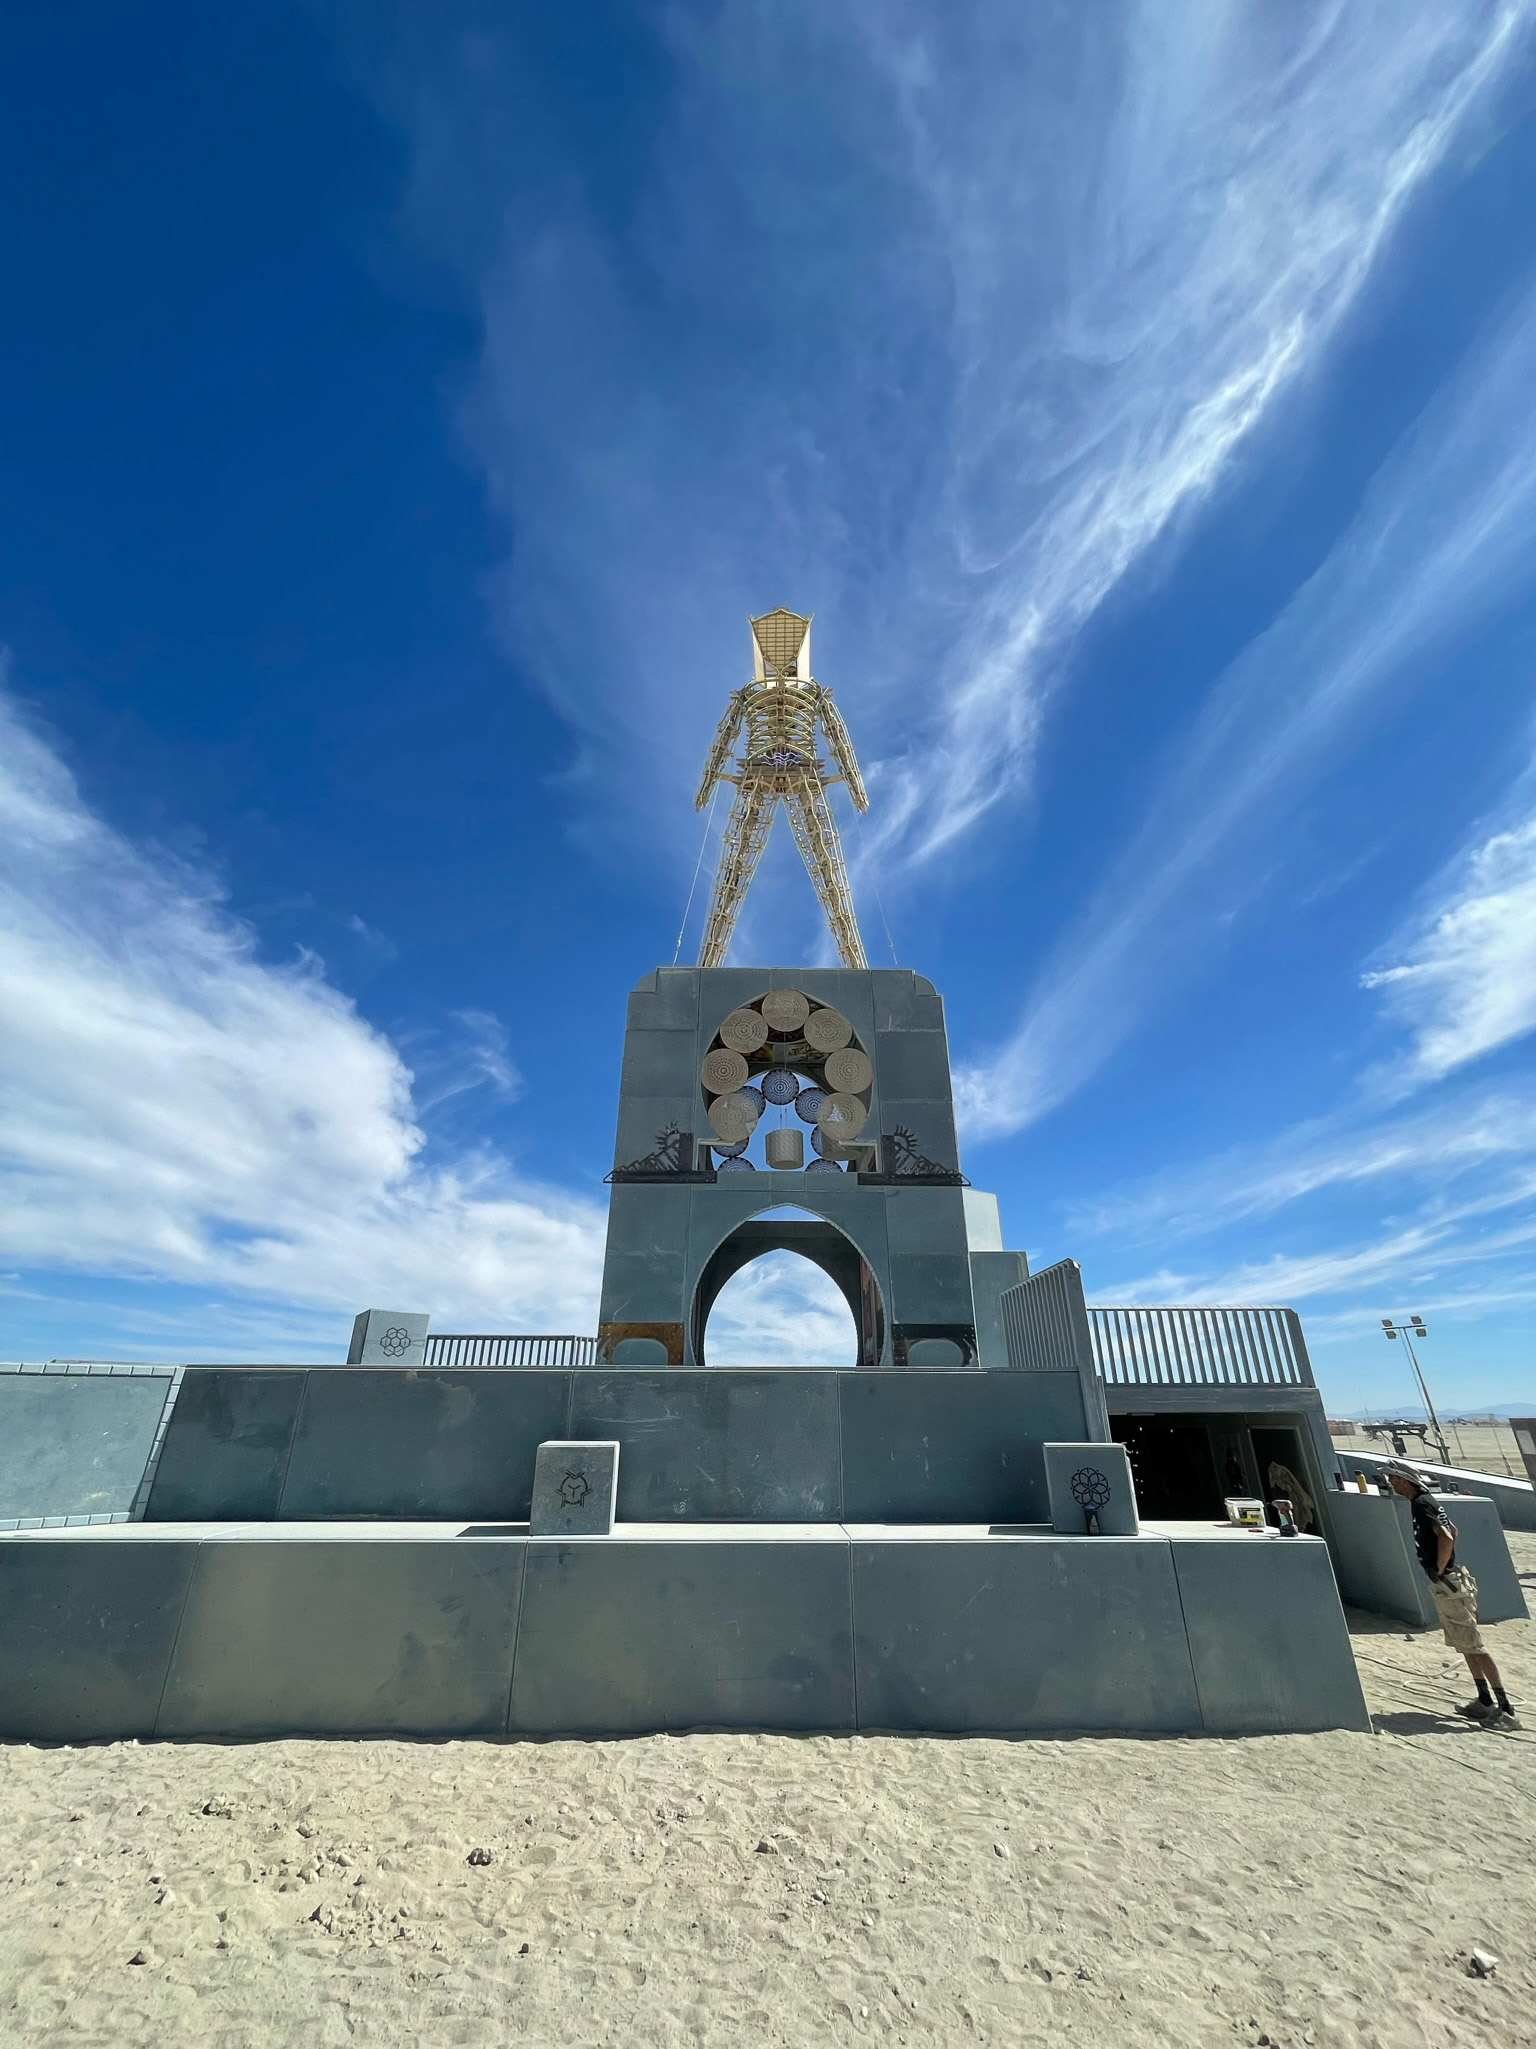 Eleven Burning Man 2022 installations that showcase deepdesert design